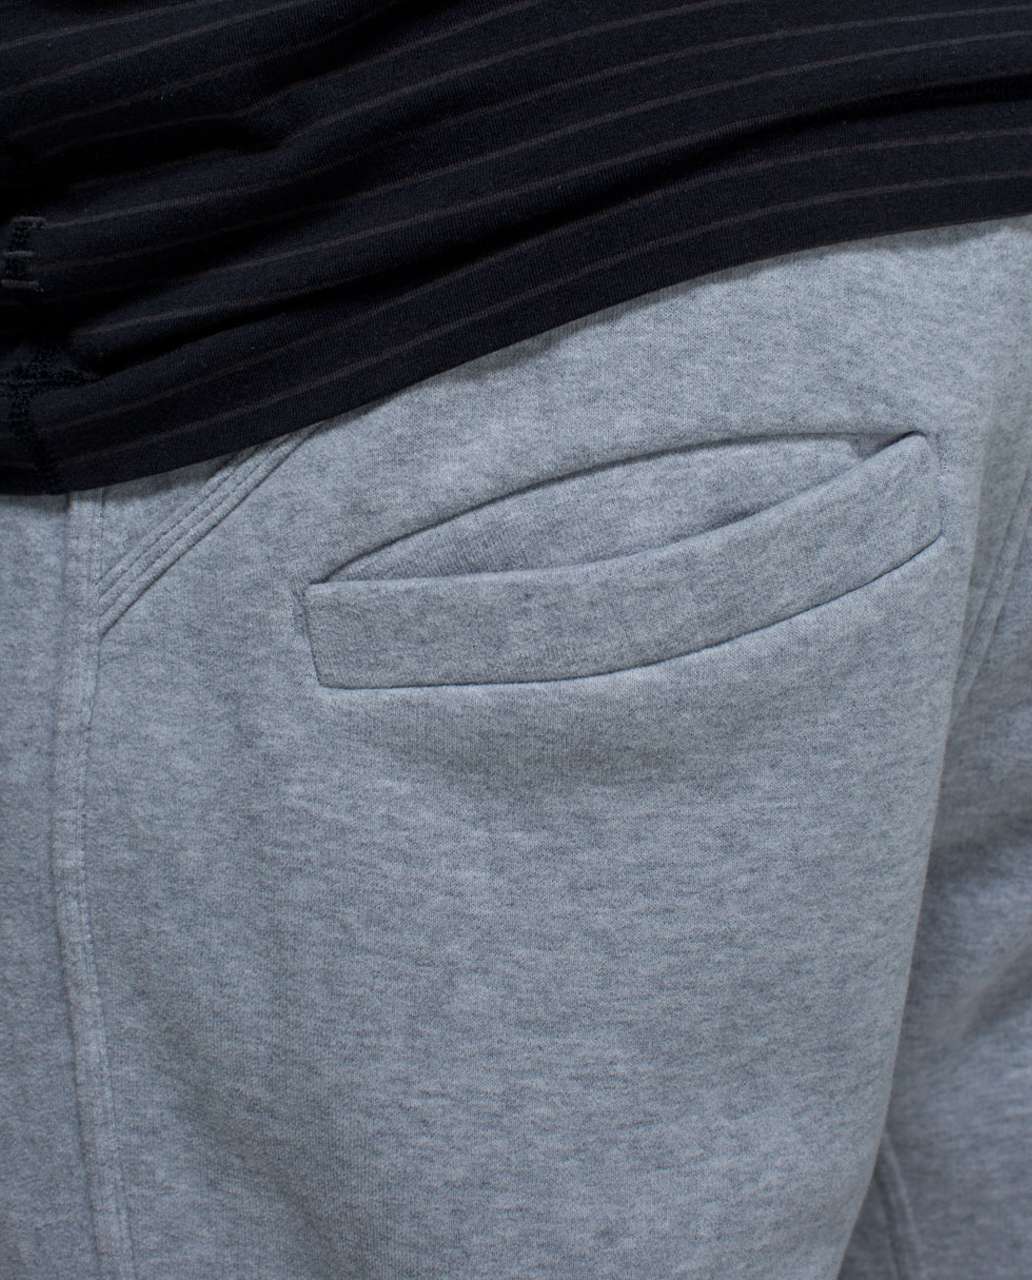 Lululemon Post Gravity Pant (Regular) - Heathered Medium Grey